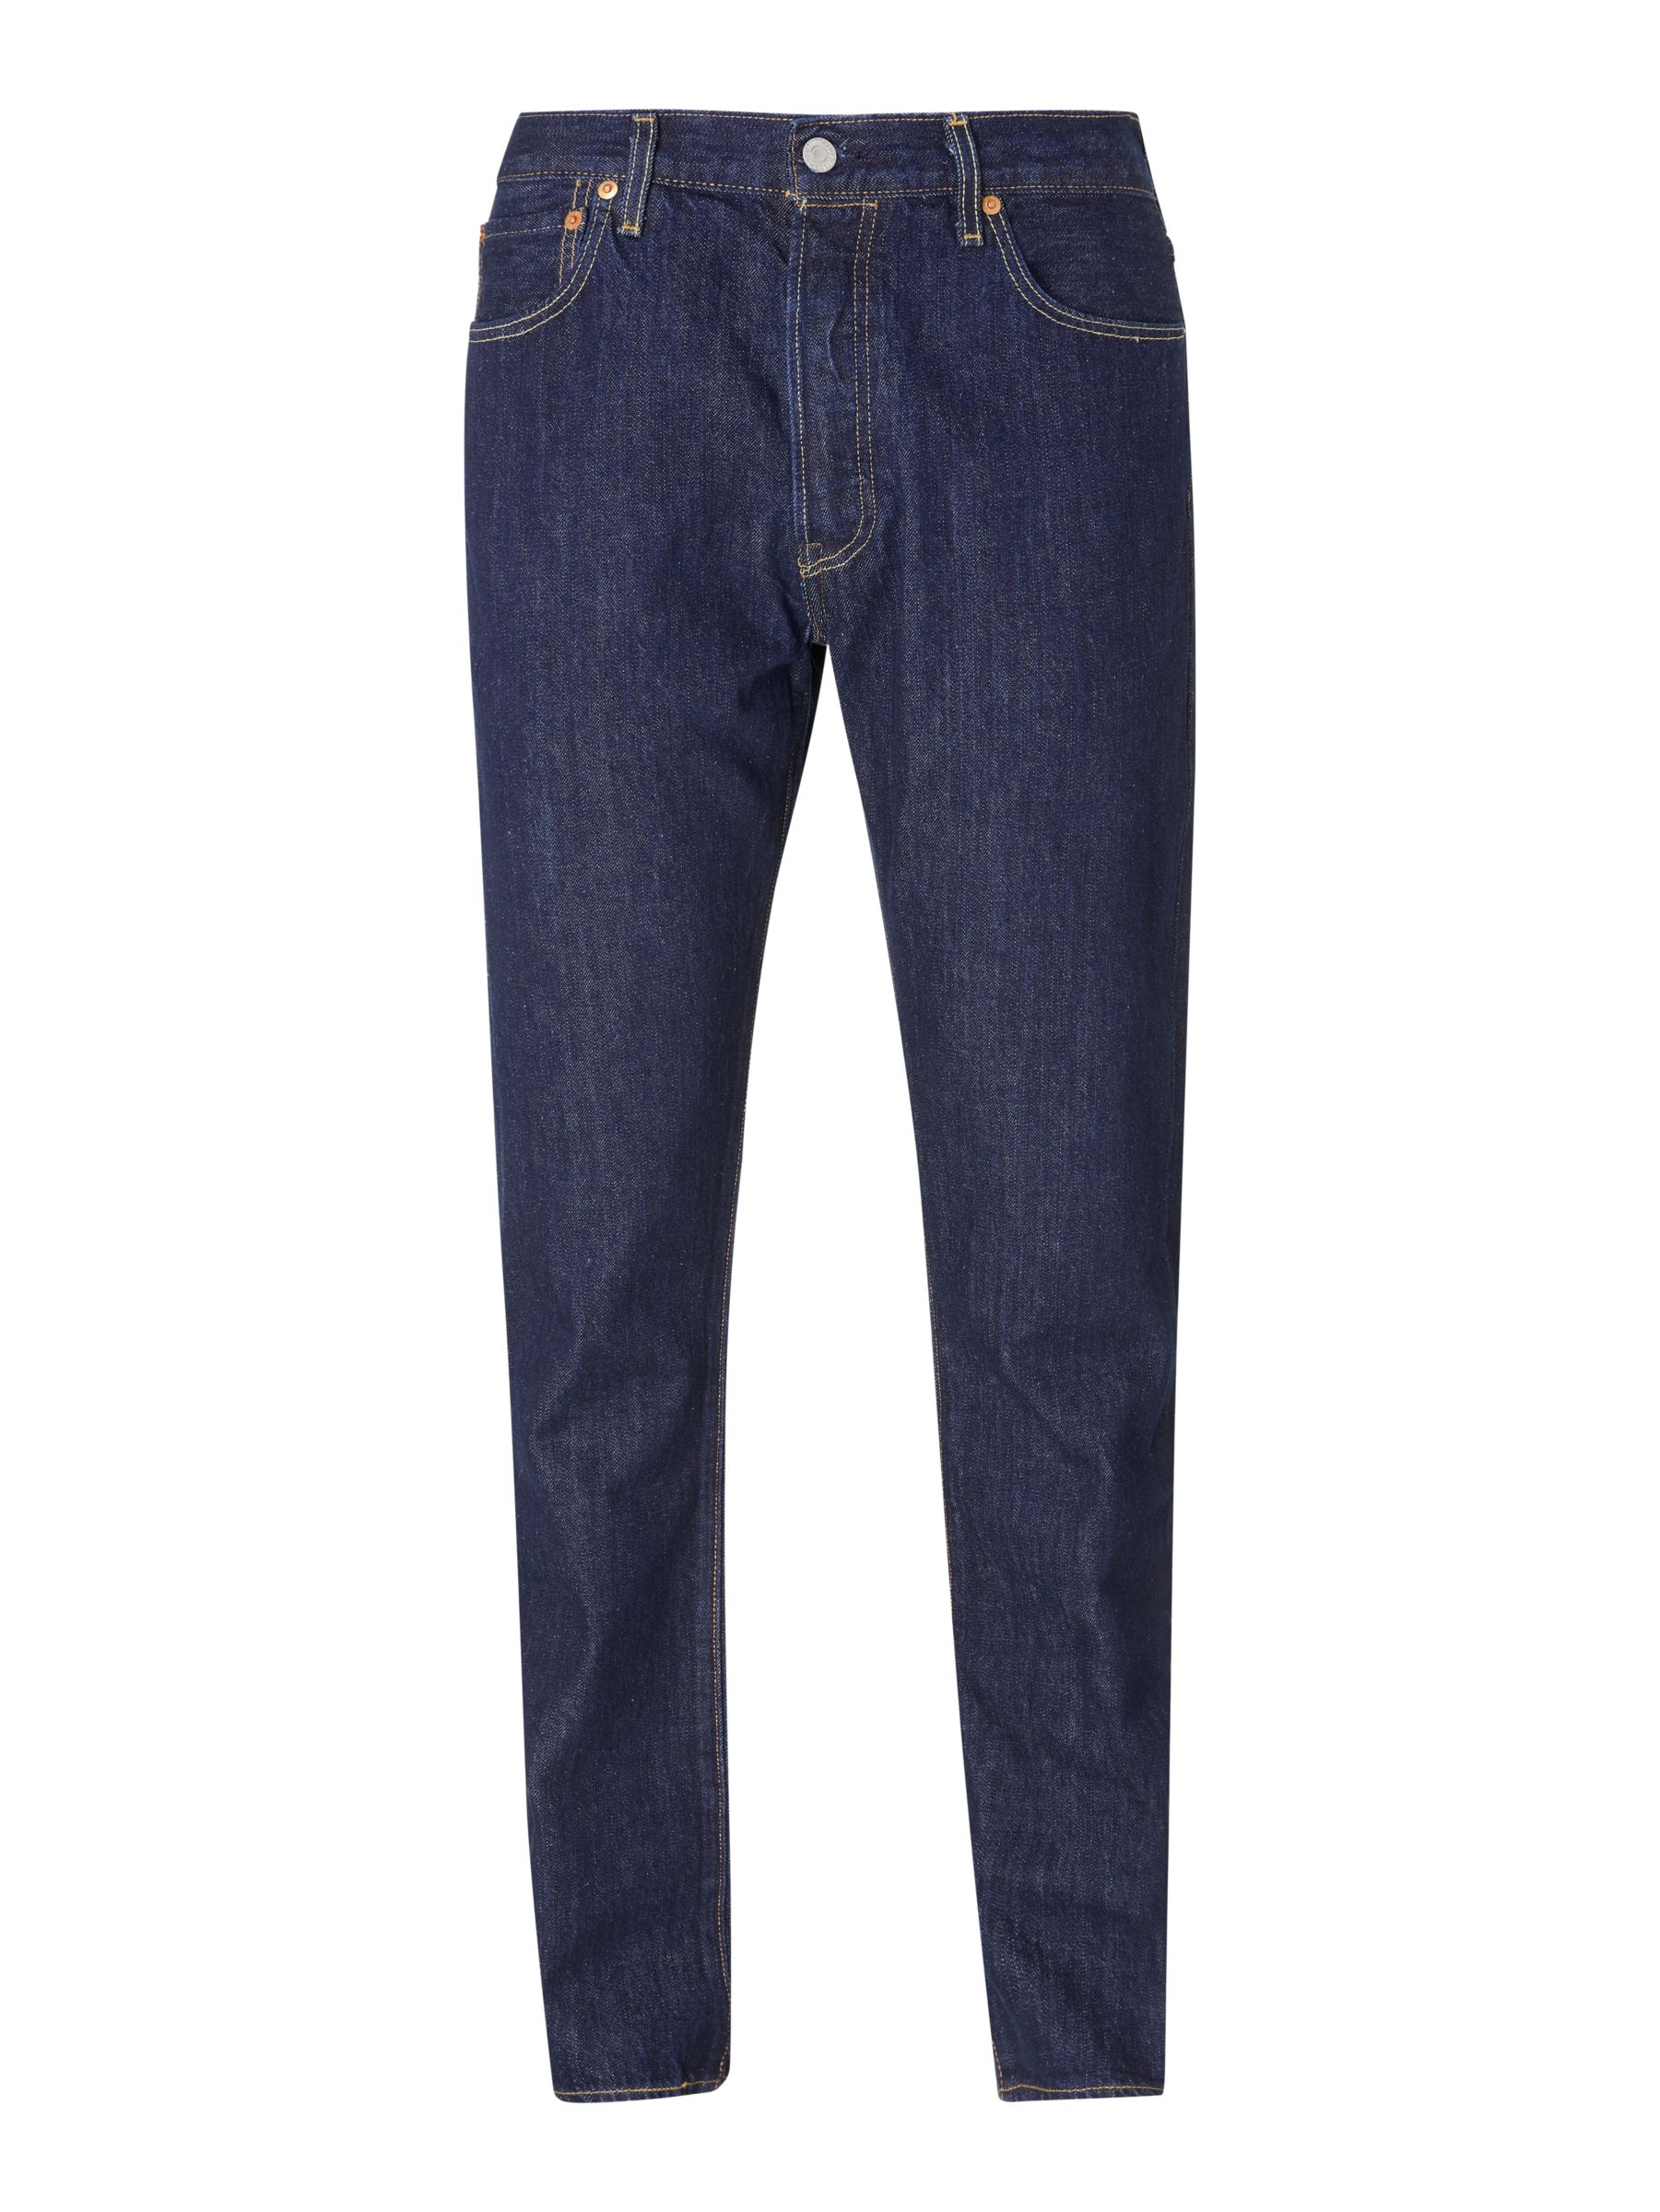 Levi's 501 Original Straight Jeans, One Wash, W30/L32